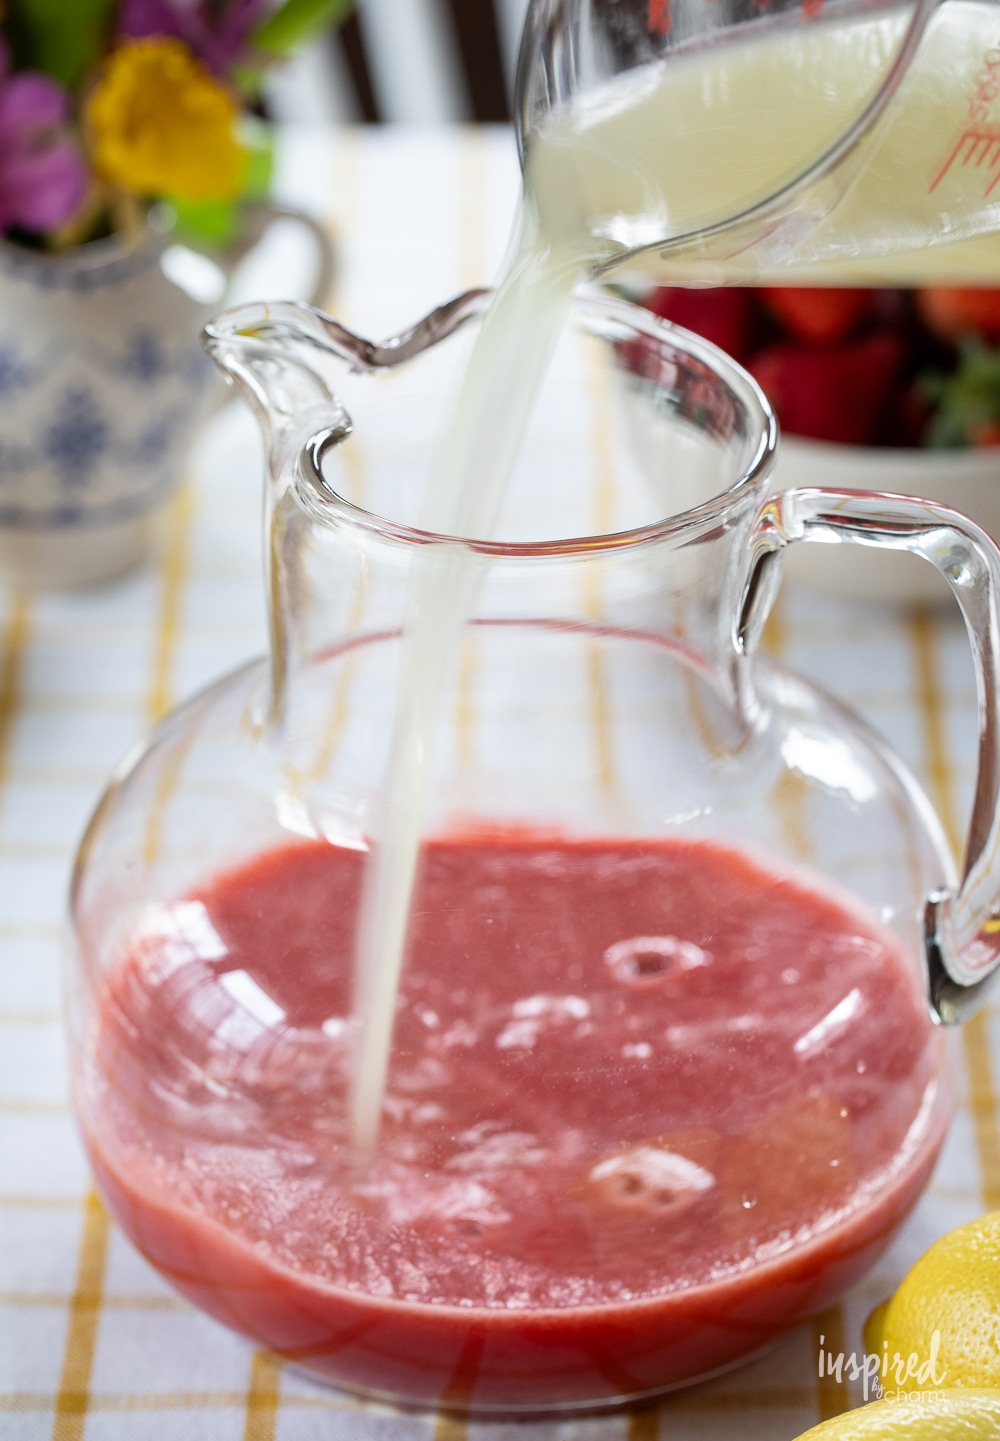 adding lemon juice to a pitcher of strawberry juice.